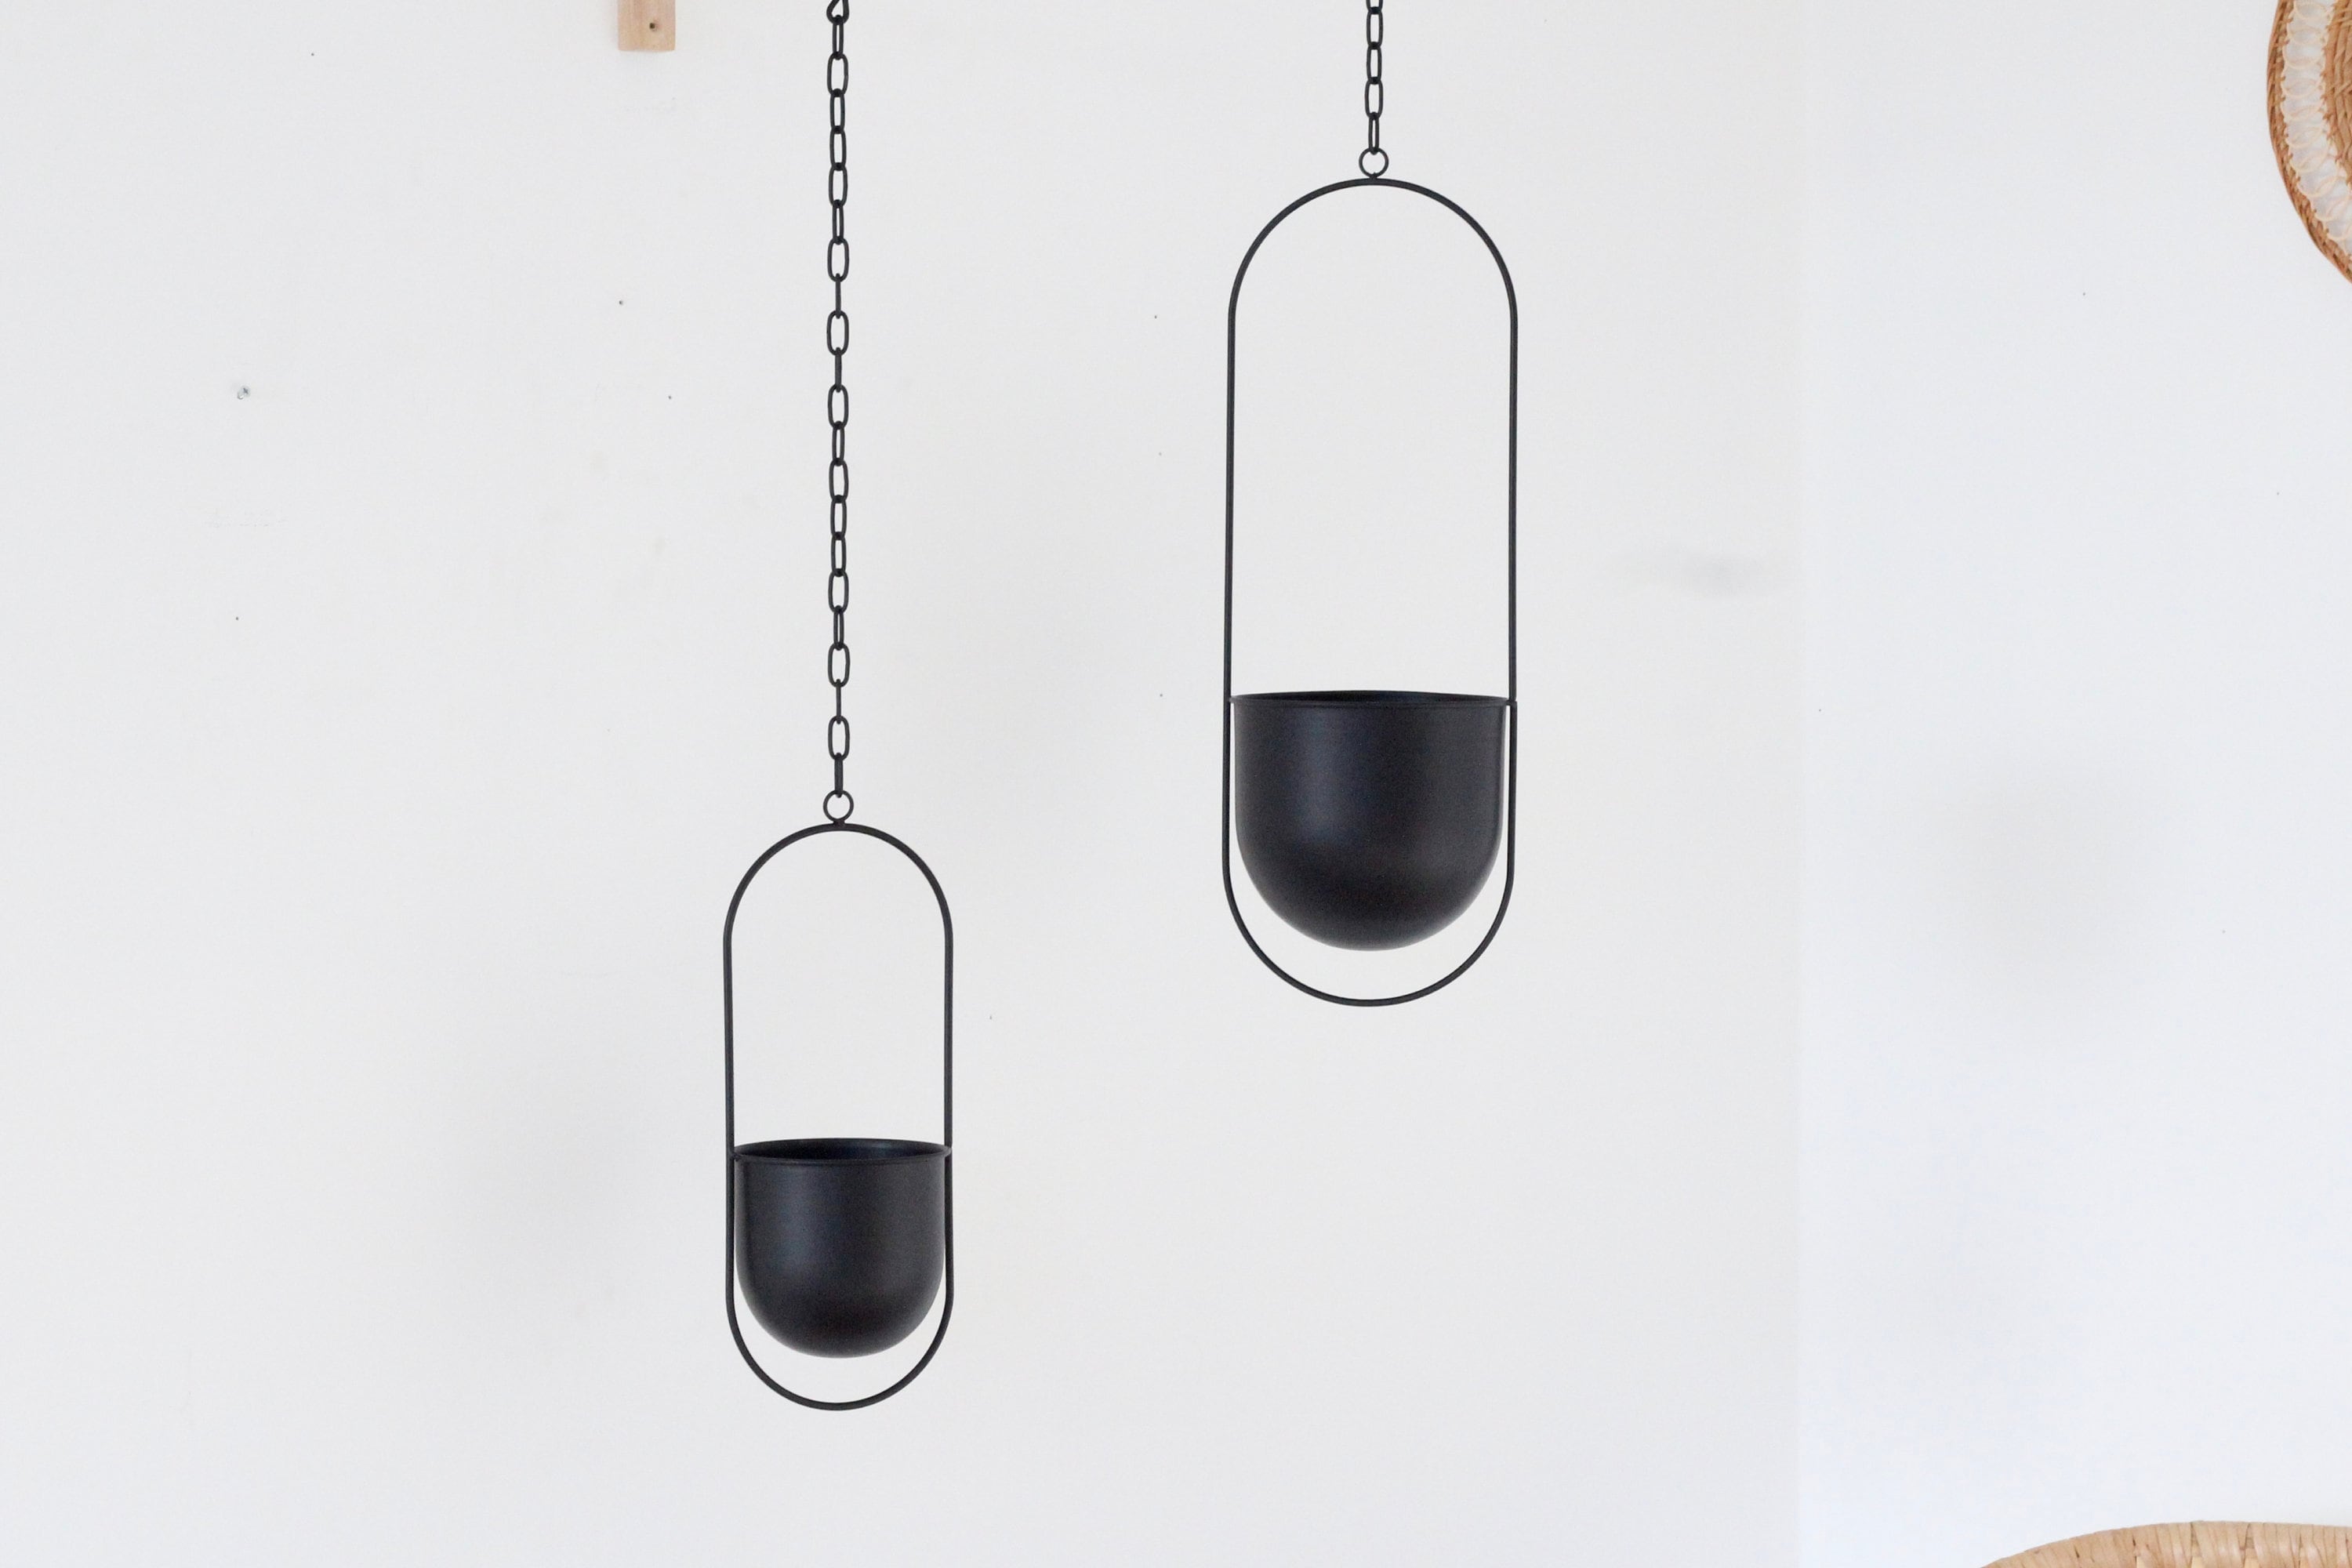 Tiered Hanging Minimalist Matte Black Metal Oval Hanging Planter